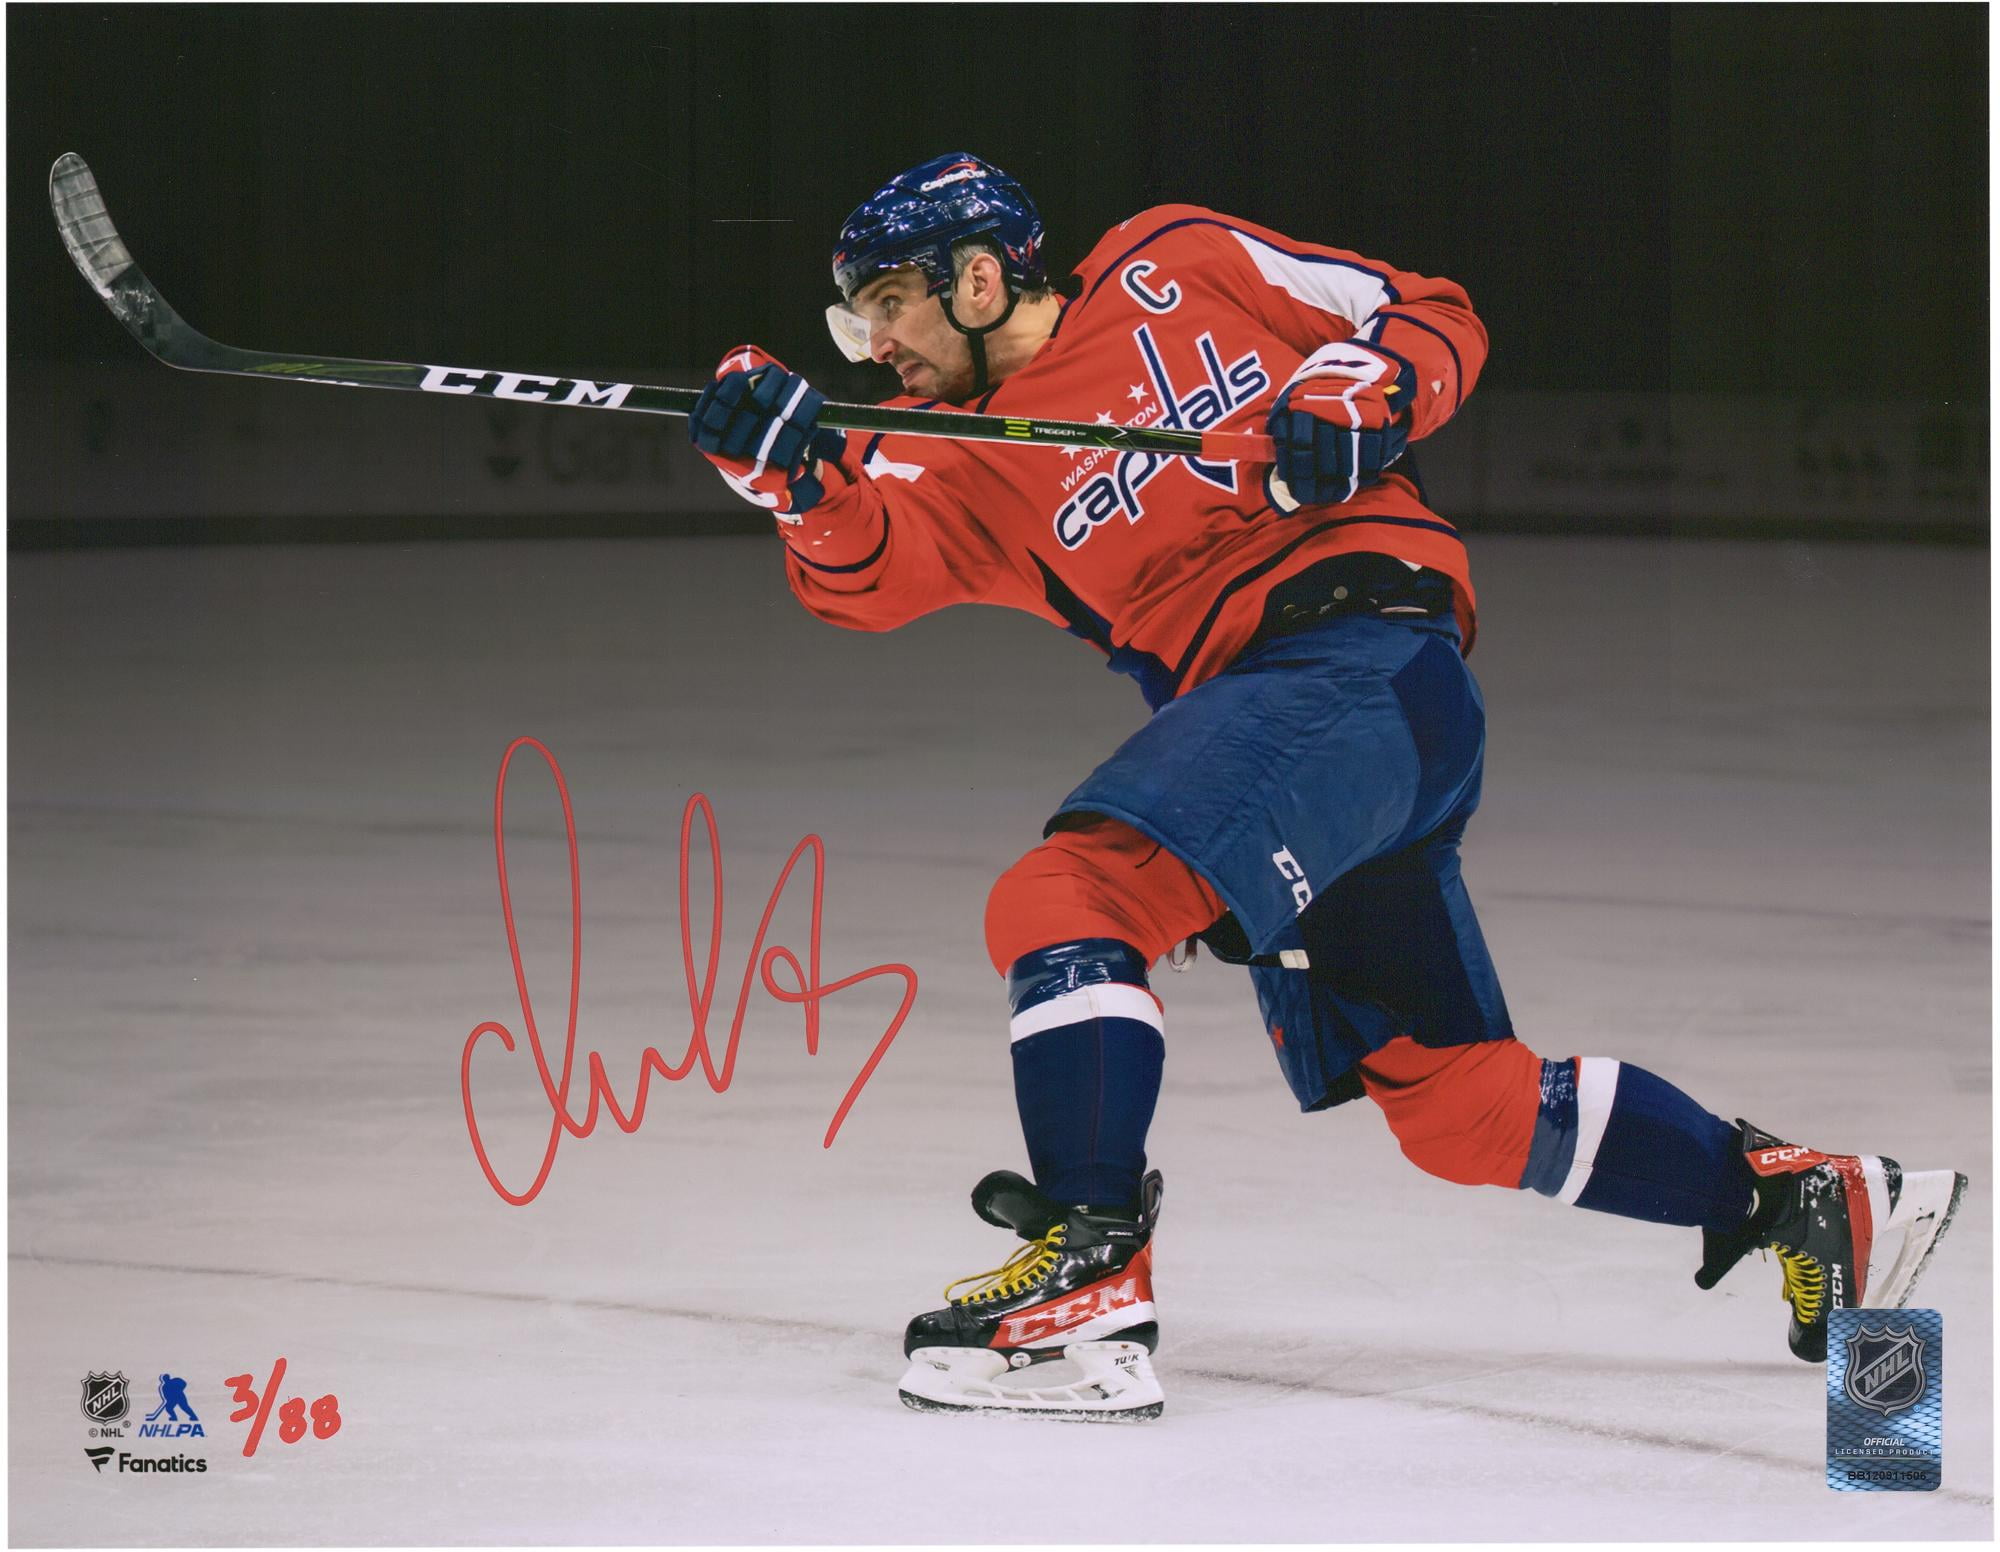 Fanatics Authentic Certified T.J Oshie Washington Capitals Autographed Mini Composite Hockey Stick 